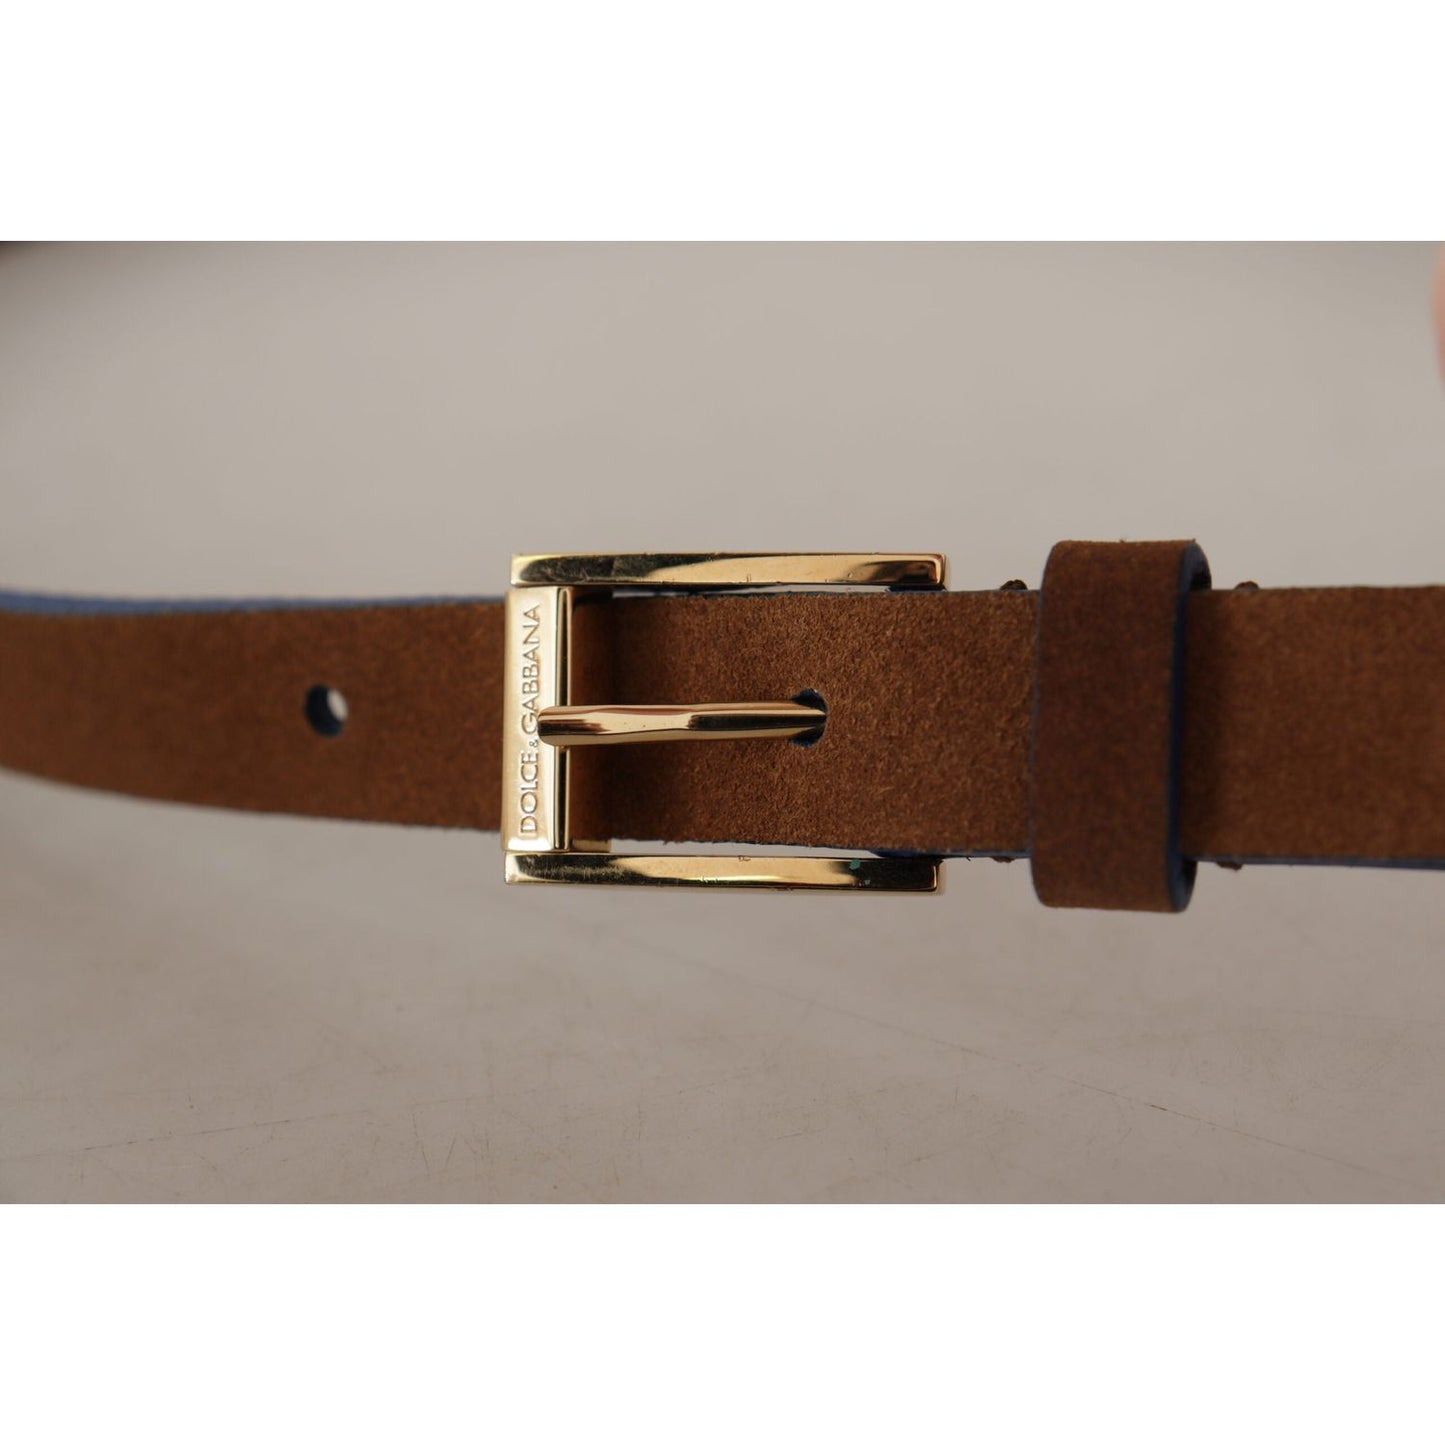 Dolce & Gabbana Elegant Suede Leather Belt with Logo Engraved Buckle dark-brown-blue-leather-gold-metal-buckle-belt IMG_8960-scaled-82ec02c1-d5f.jpg